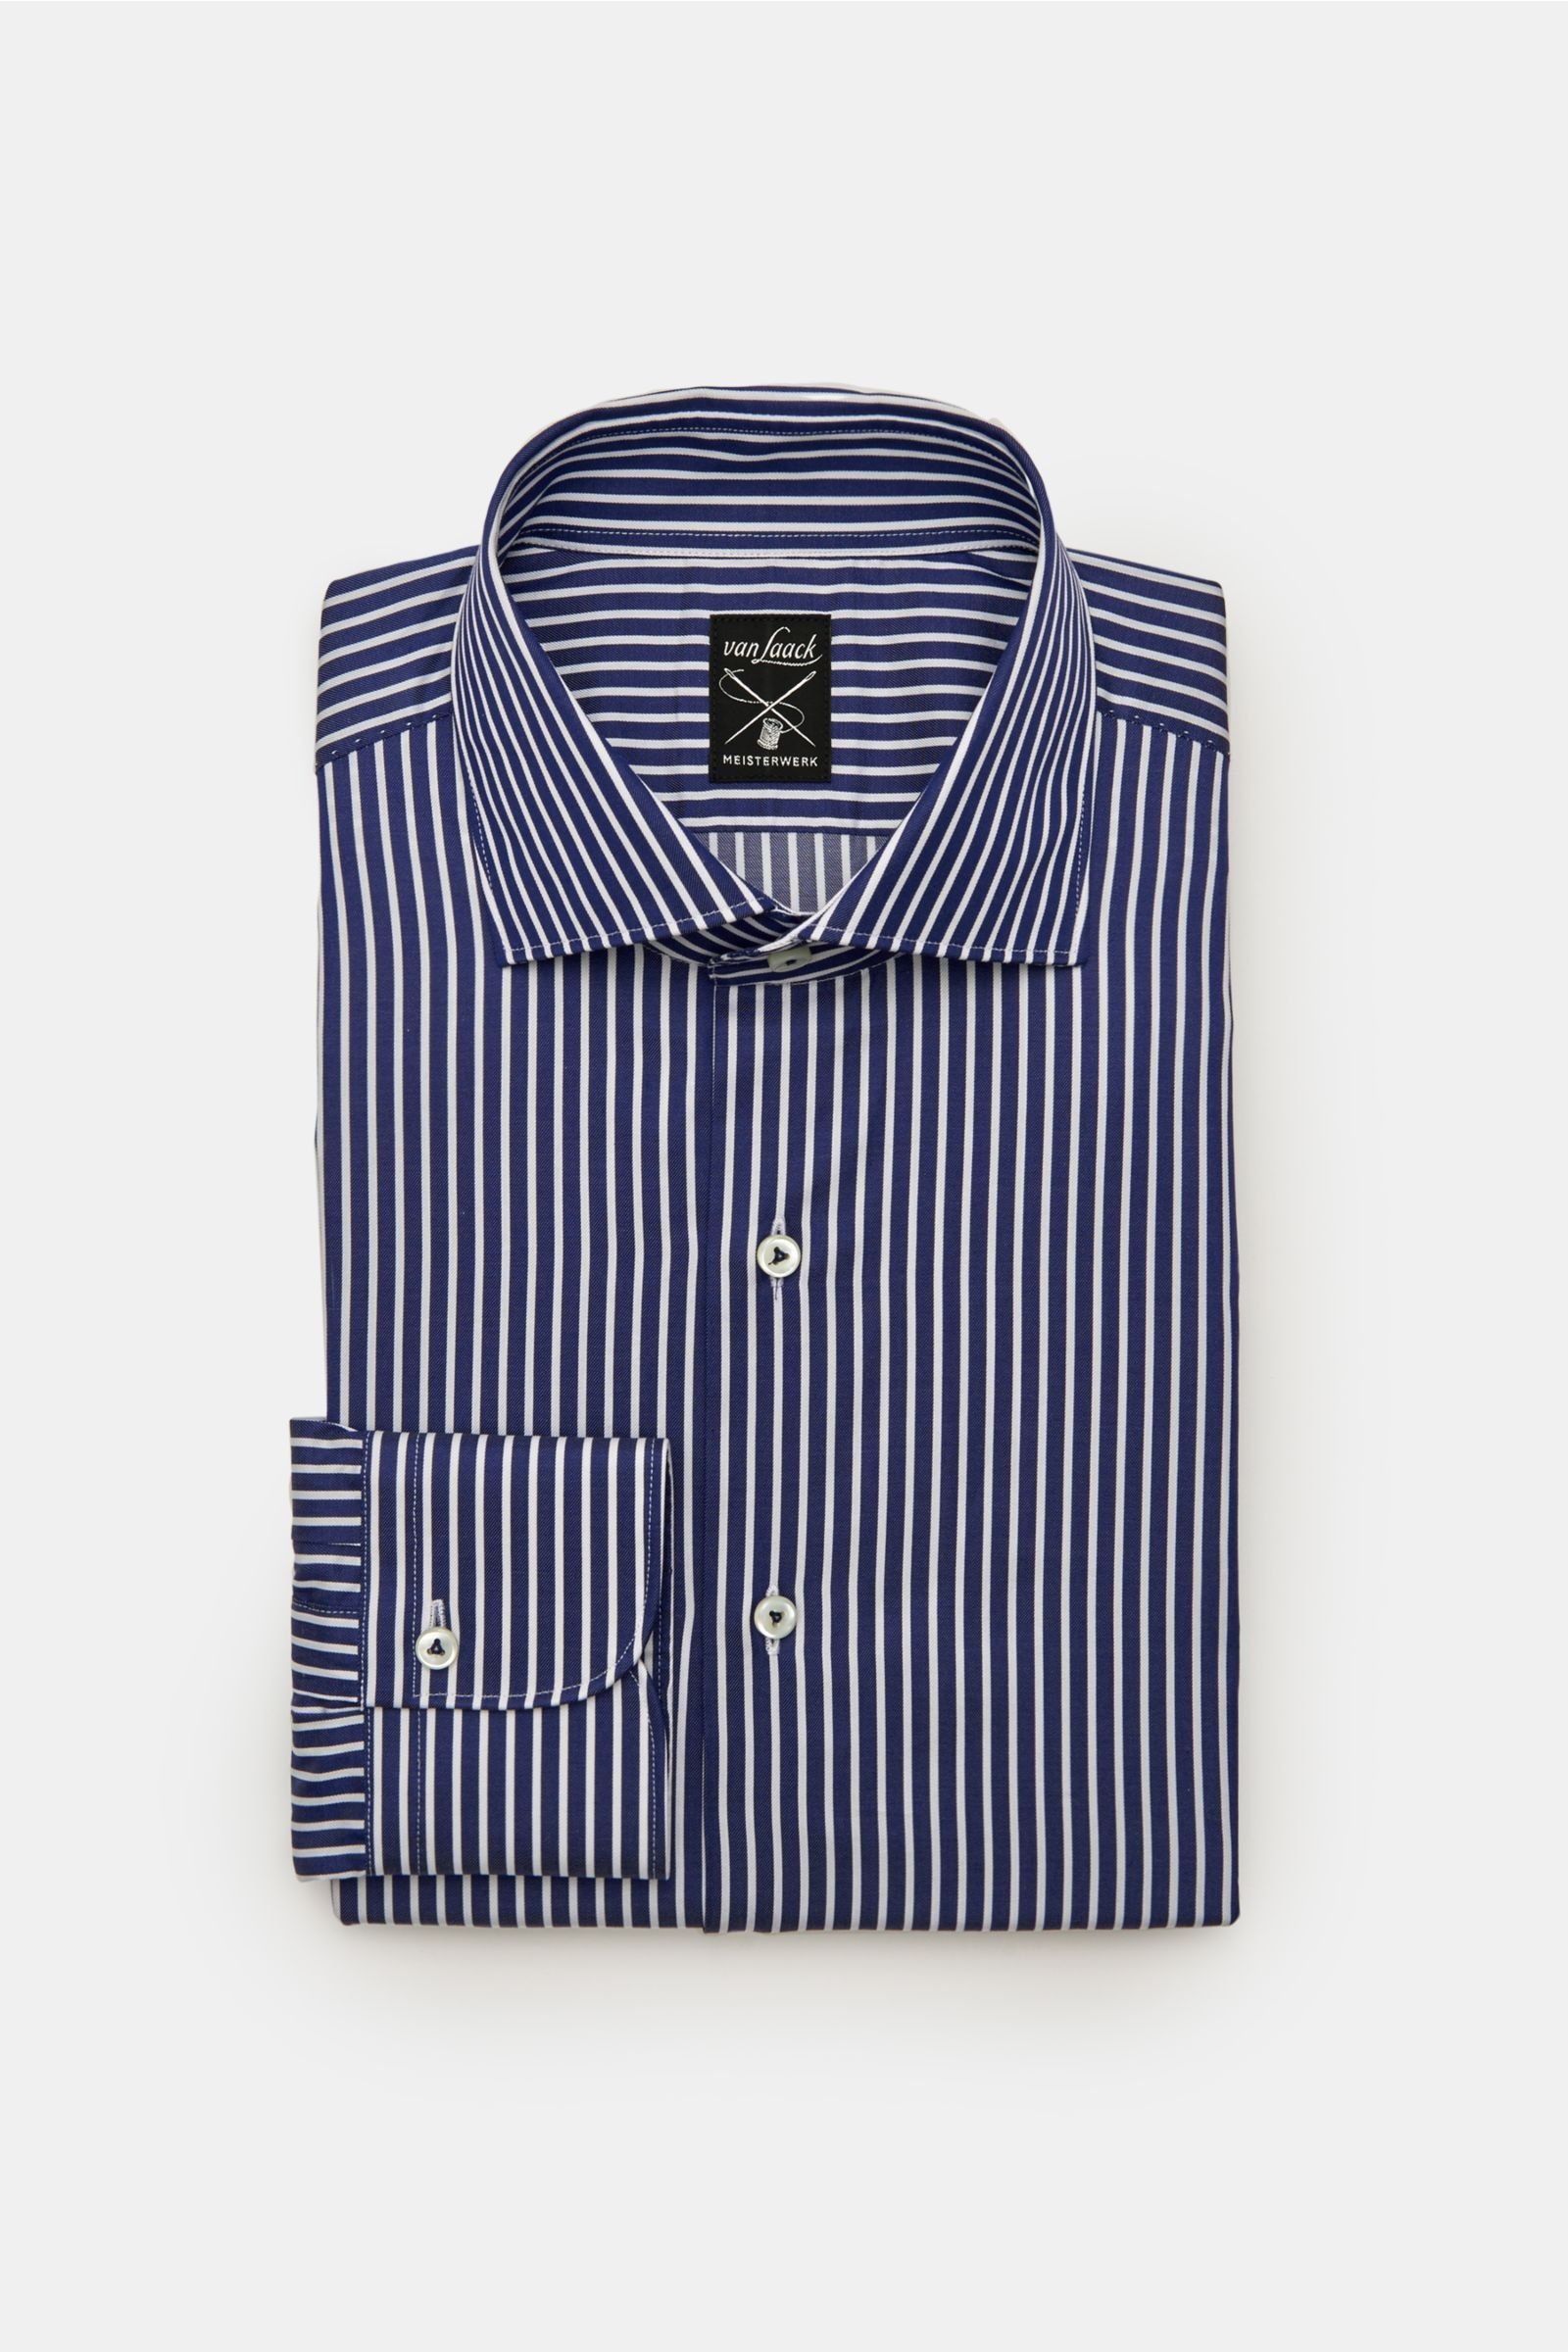 Business shirt 'Mivara Tailor Fit' shark collar navy/white striped